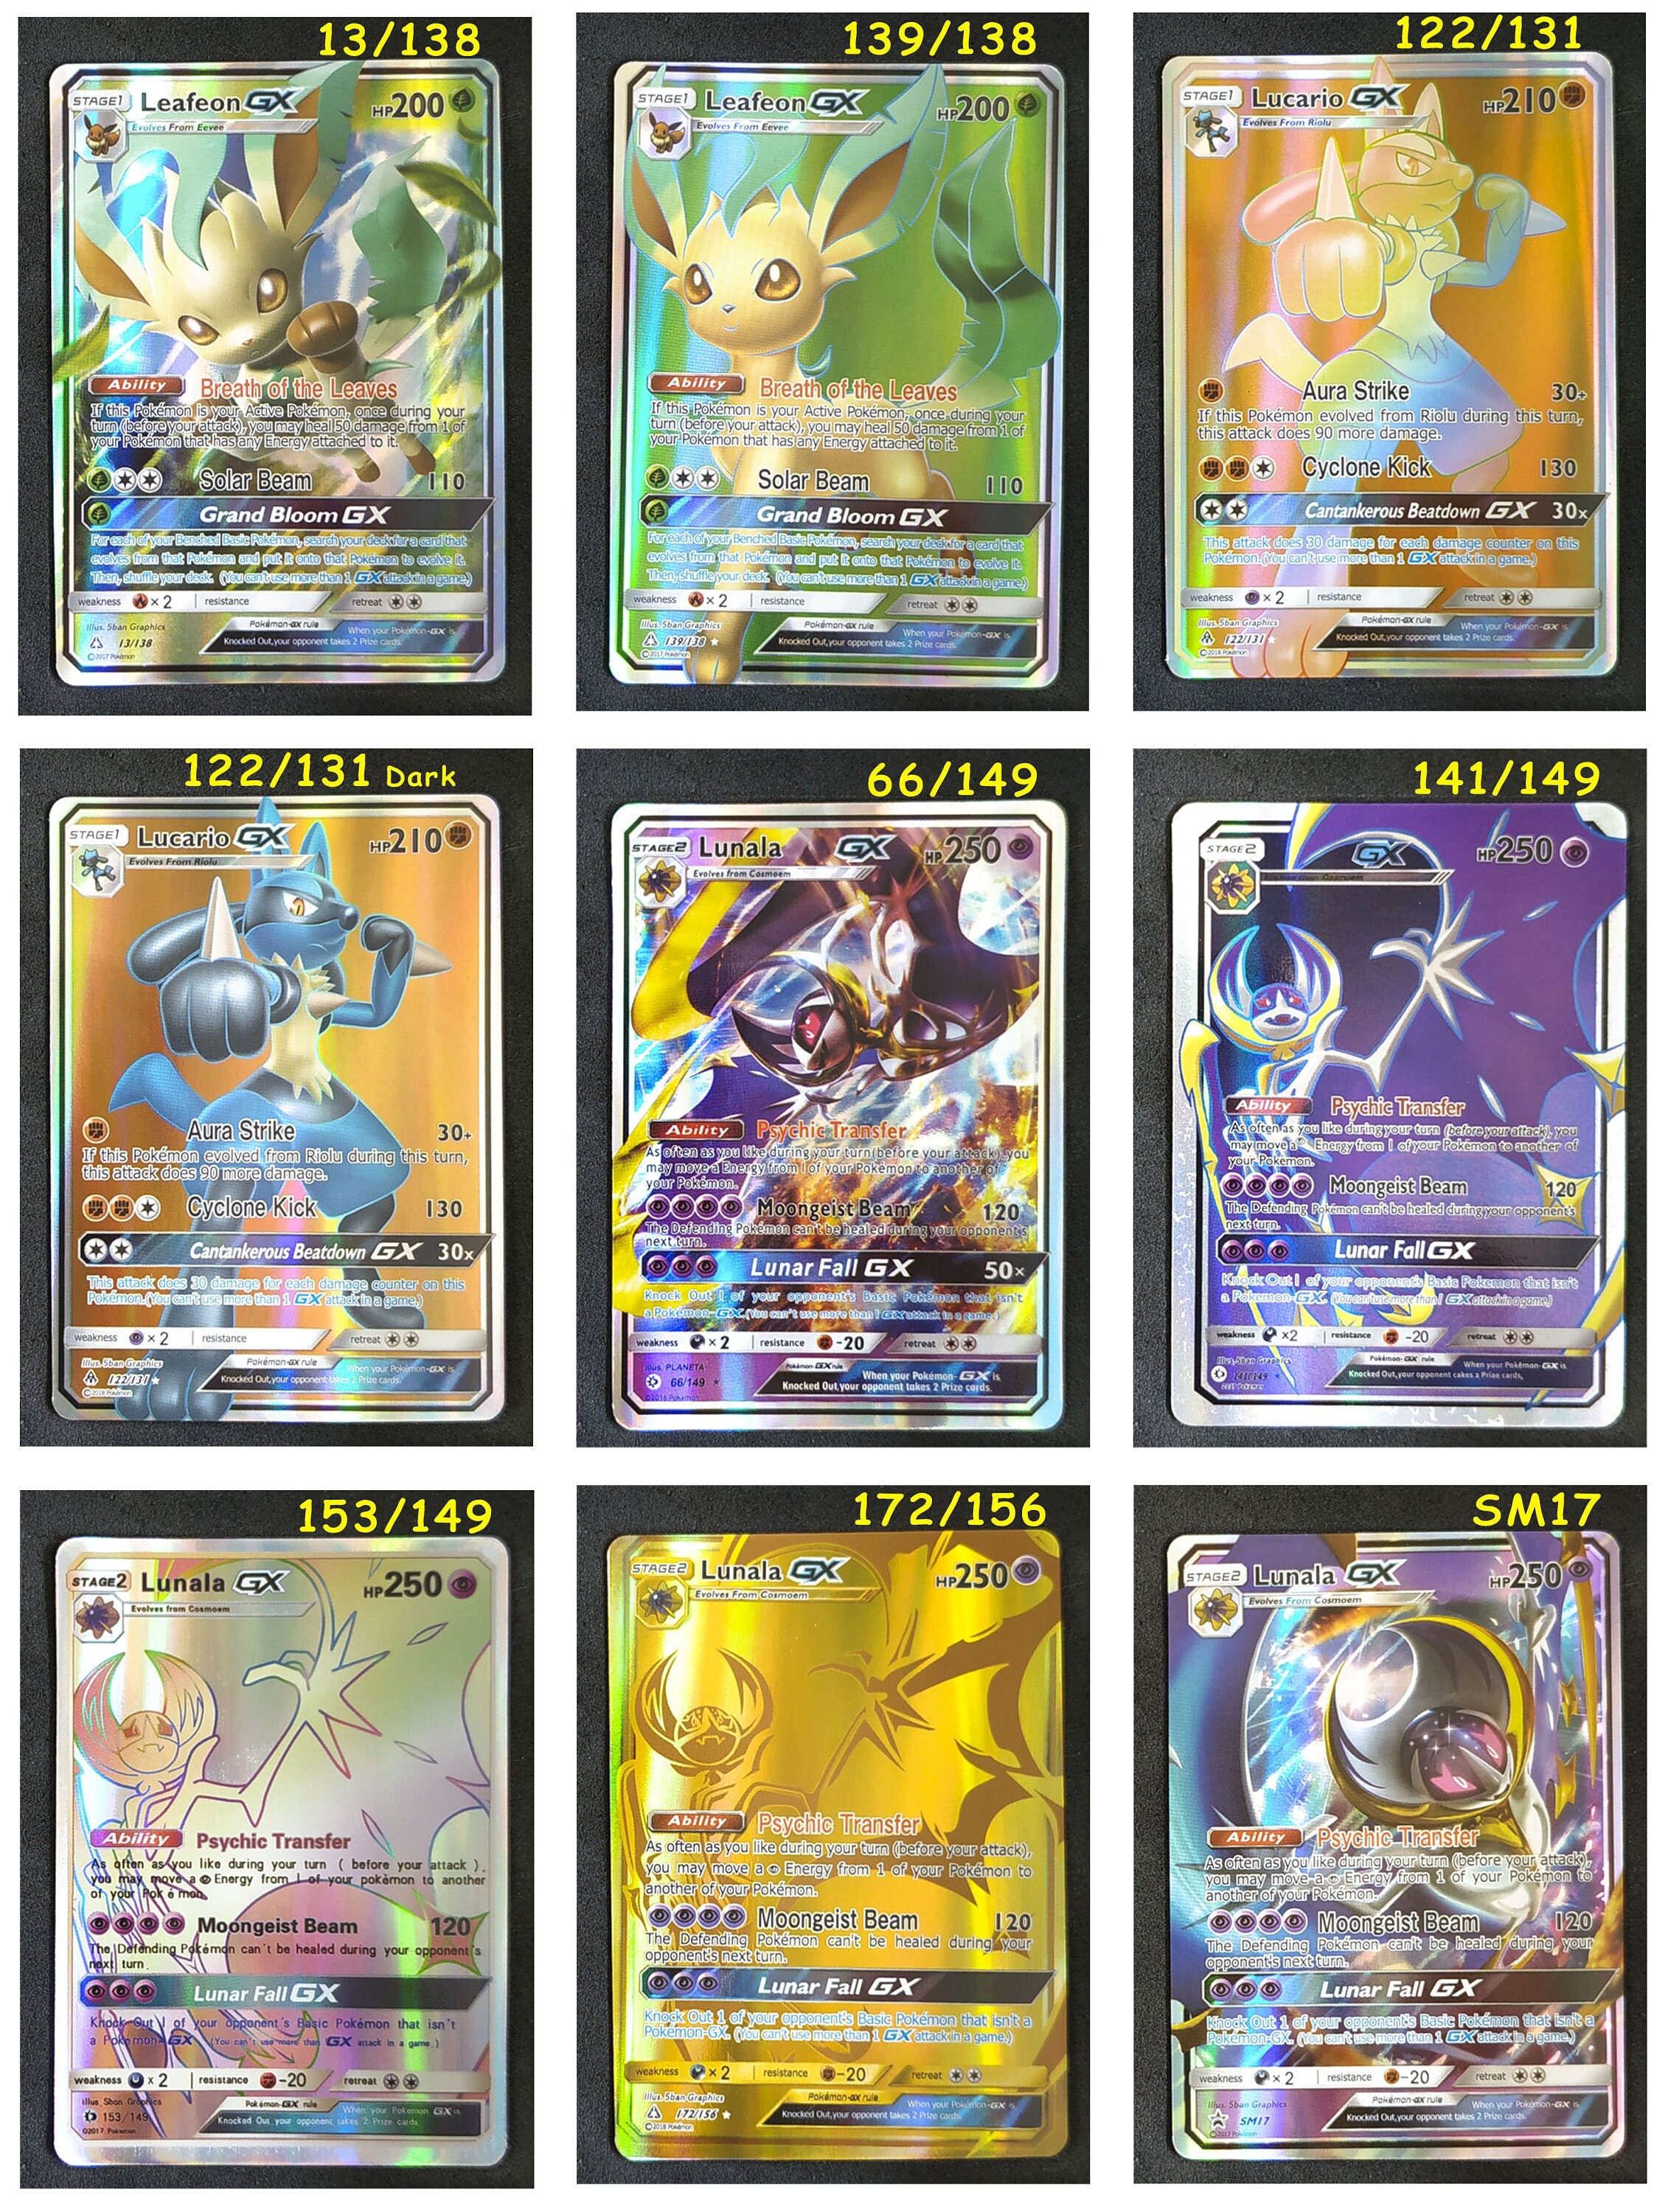 Lunala GX - Sun & Moon Pokémon card 141/149